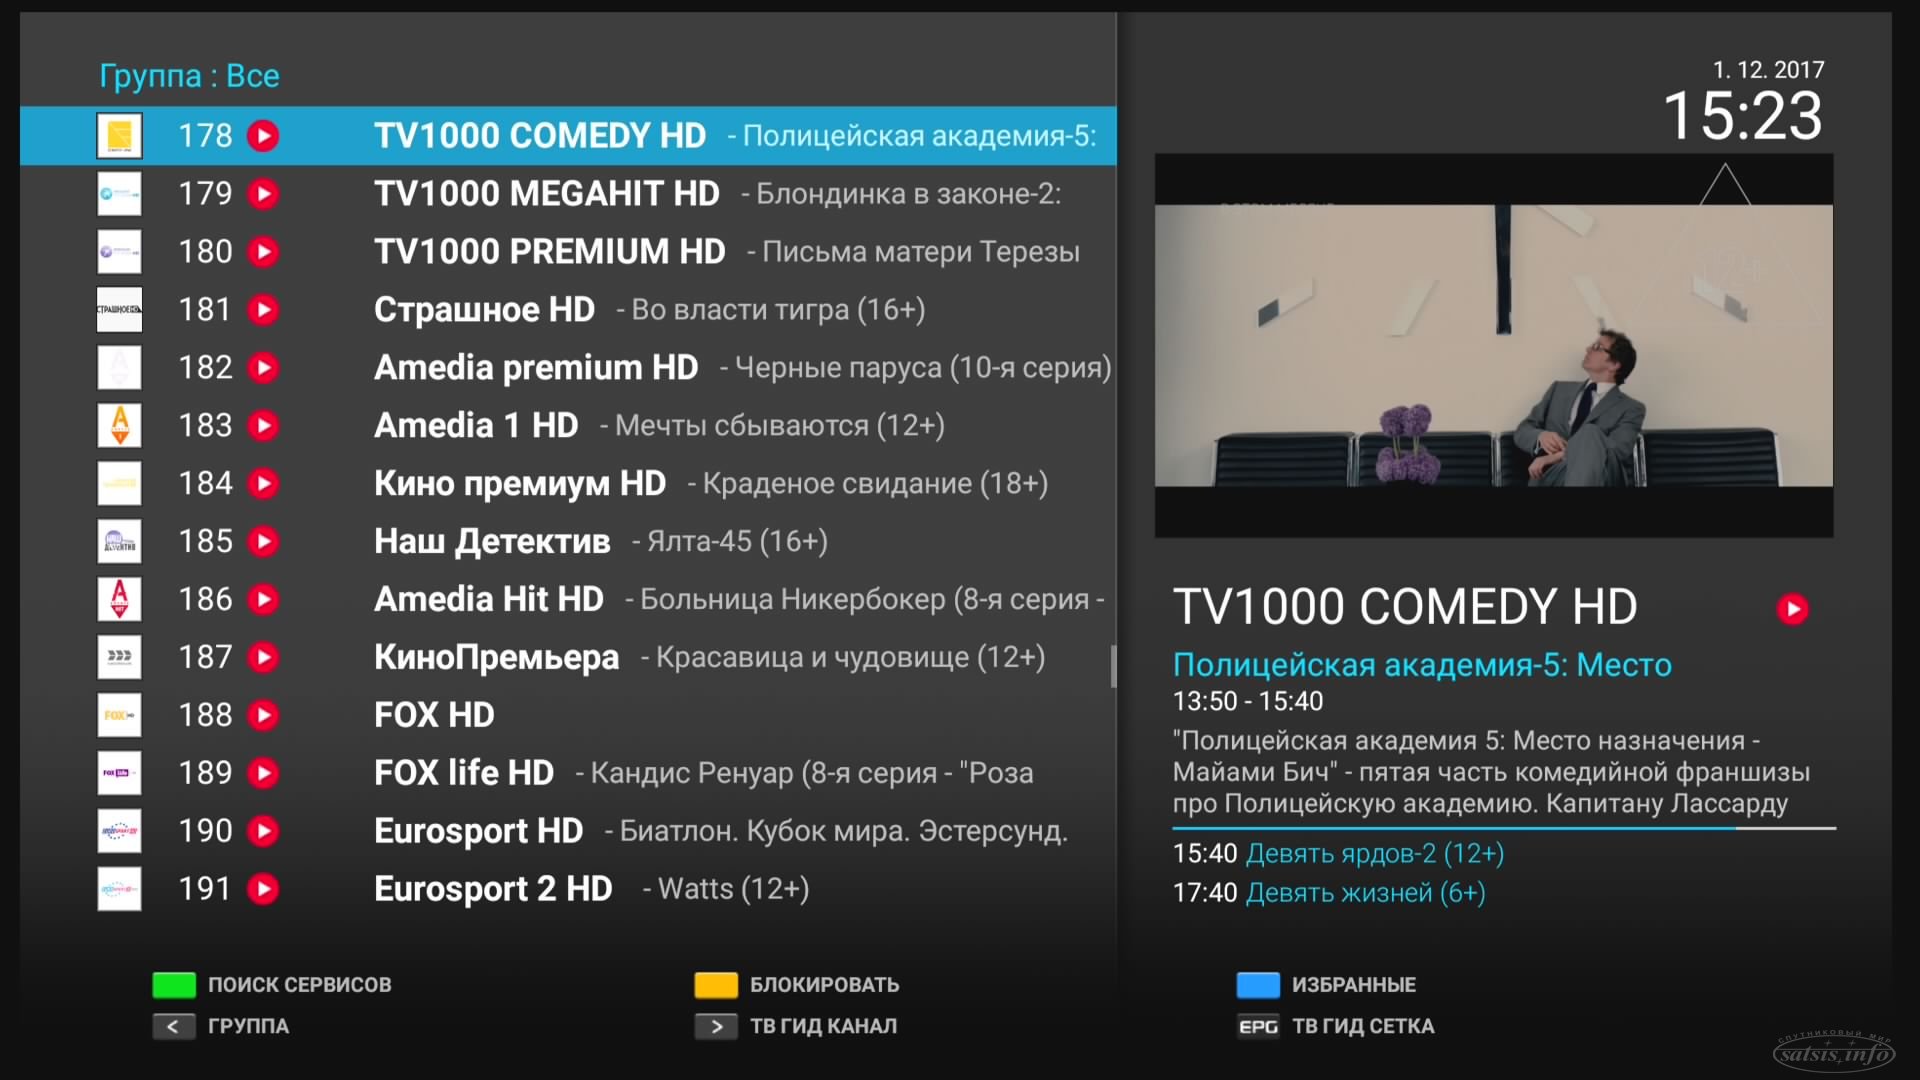 Программа 1000 тв на сегодня yaomtv ru. Openbox as4k/ as4k+. Редактор каналов в Openbox as4k. Openbox as4k установка Wallpaper.